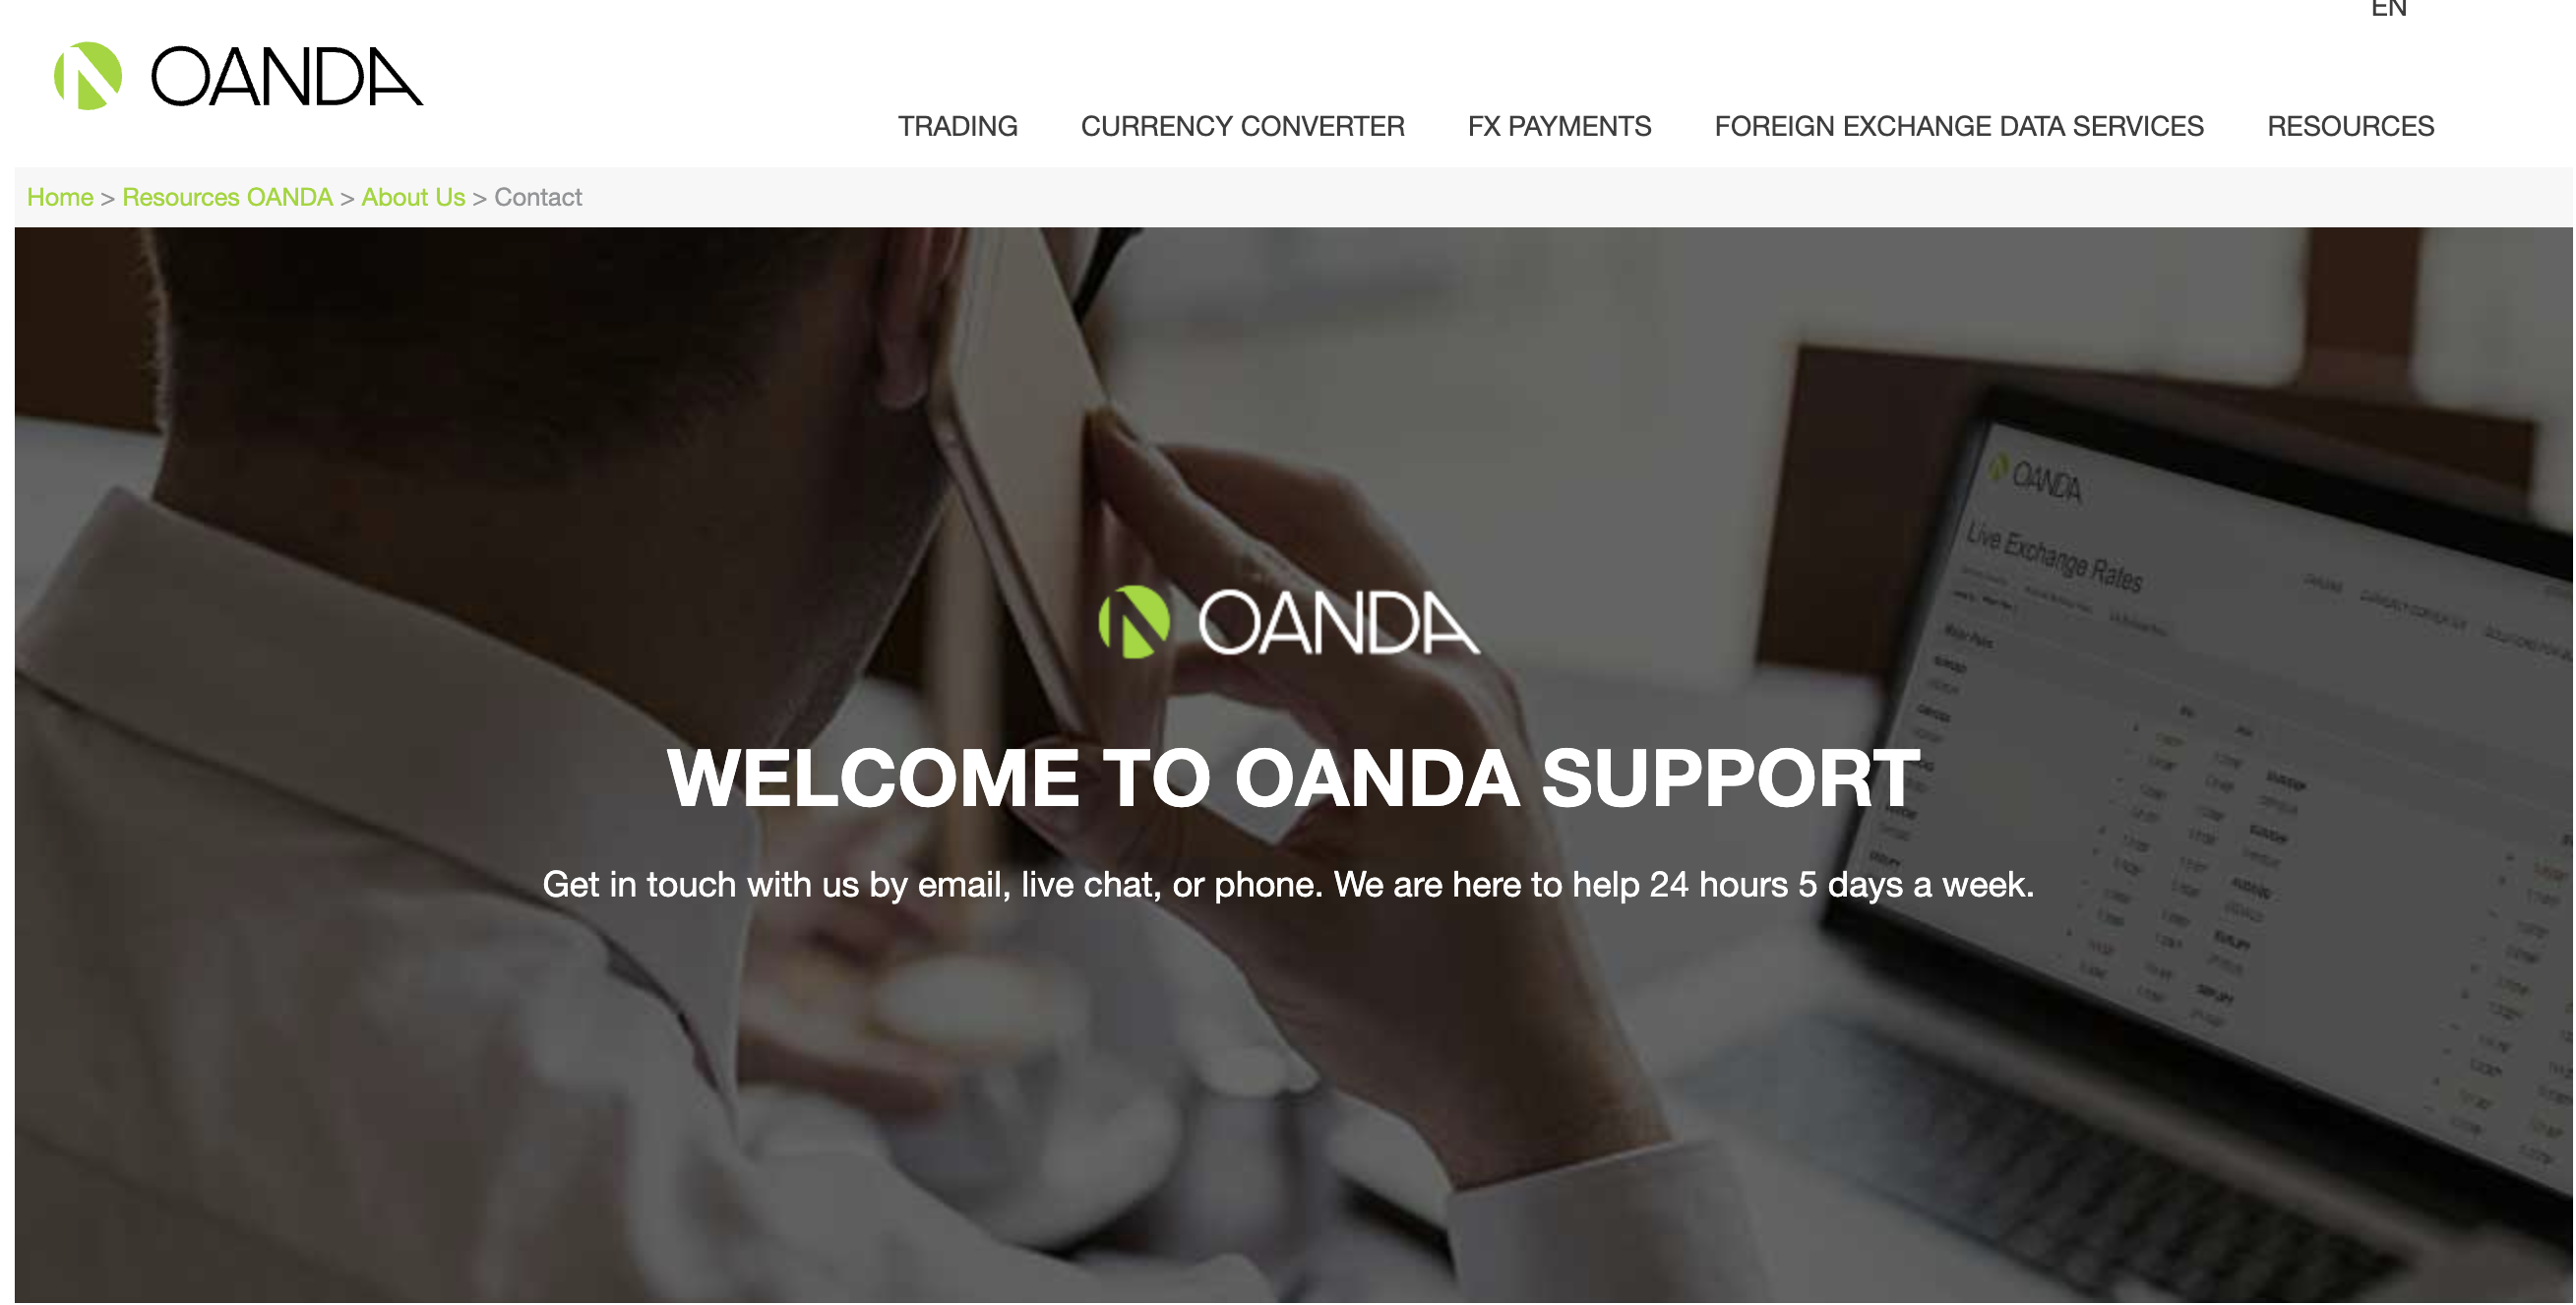 OANDA Customer Support